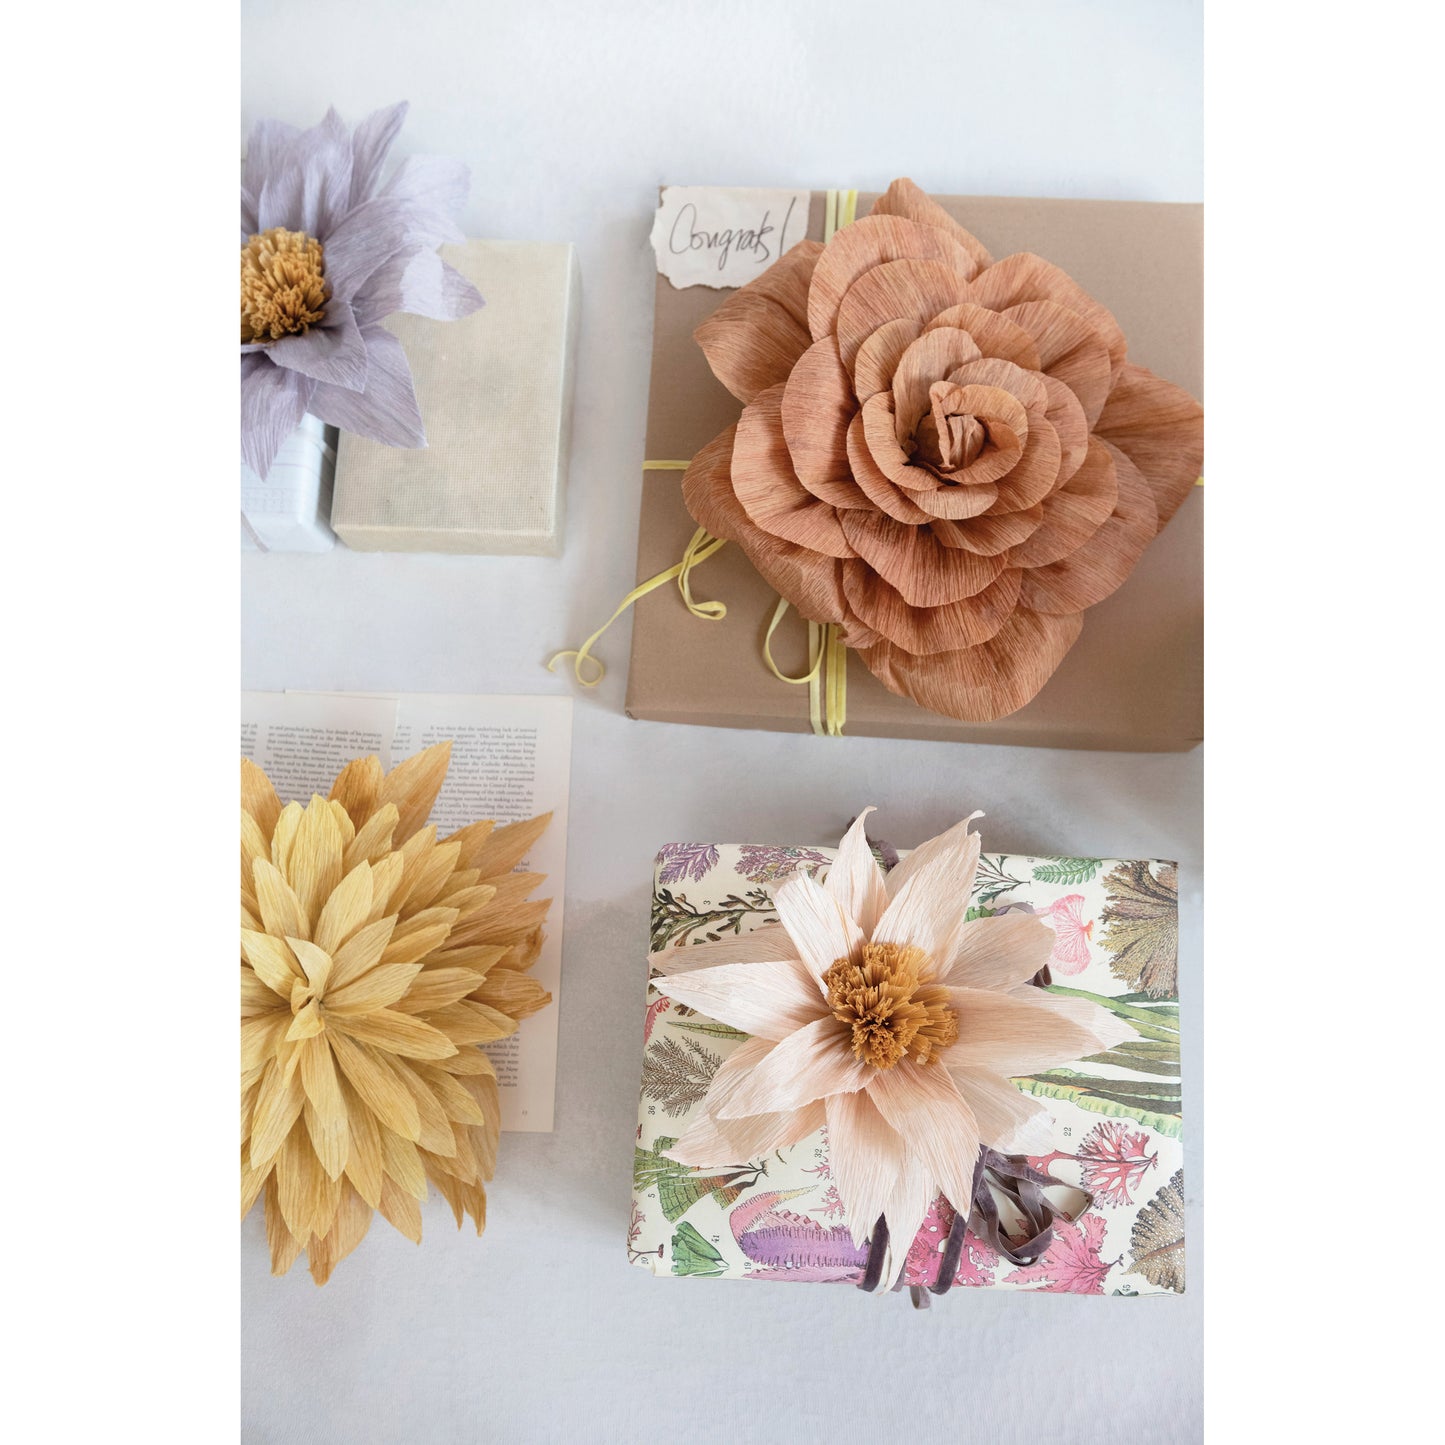 Handmade Paper Flowers